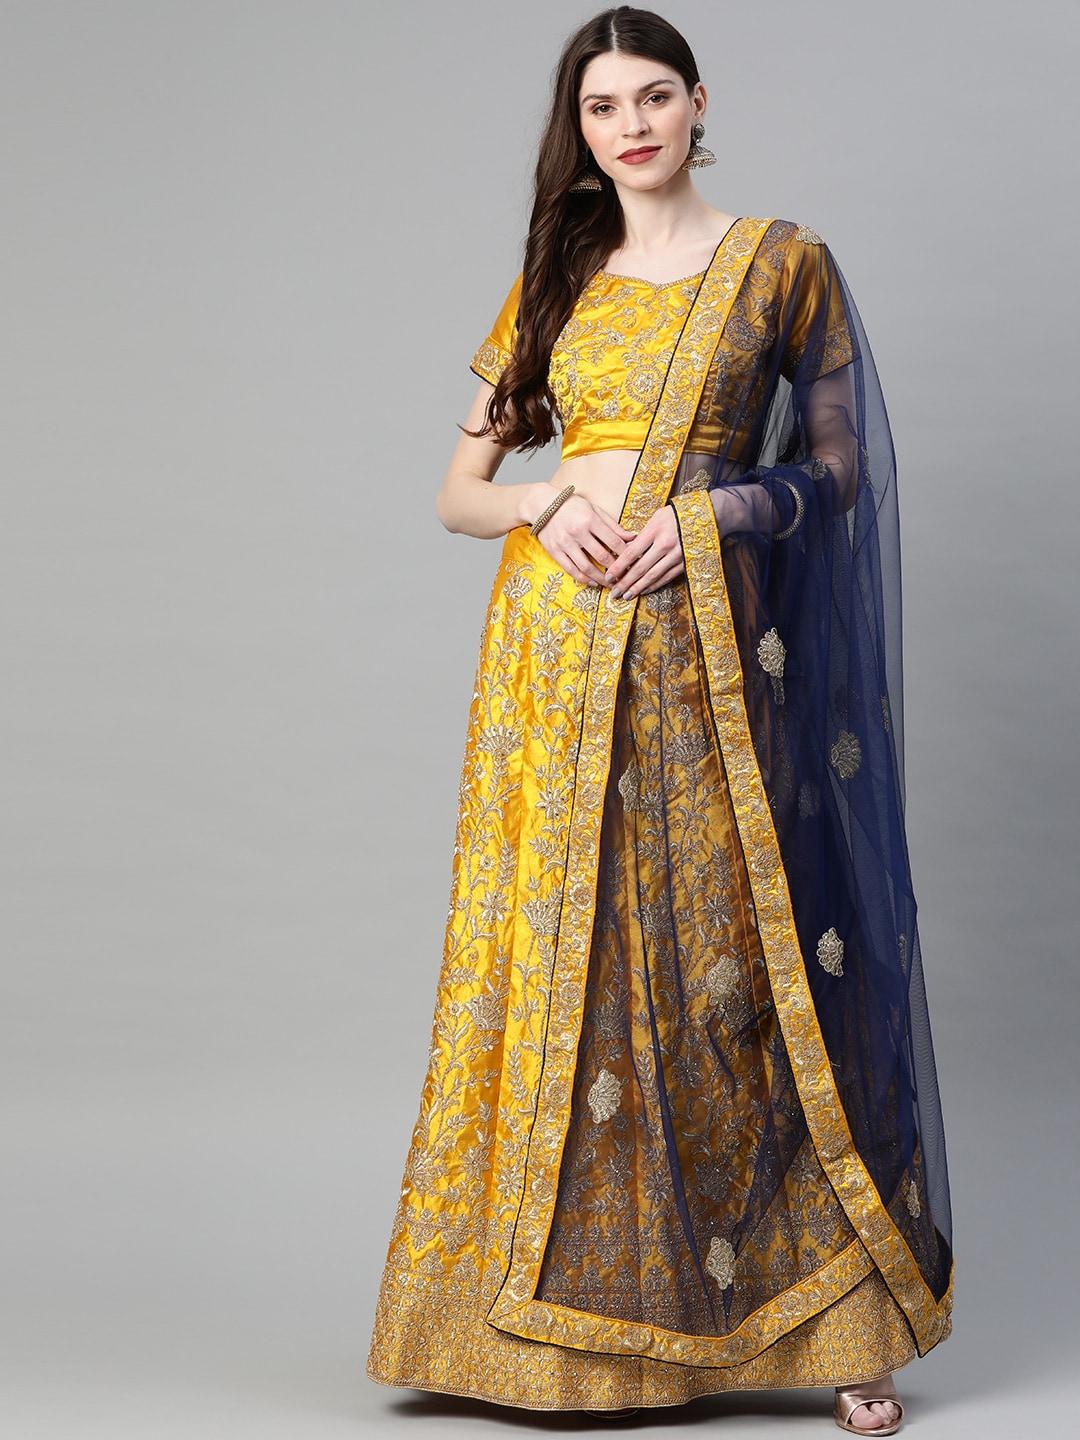 Readiprint Fashions Yellow & Blue Embroidered Semi-Stitched Lehenga & Unstitched Blouse with Dupatta